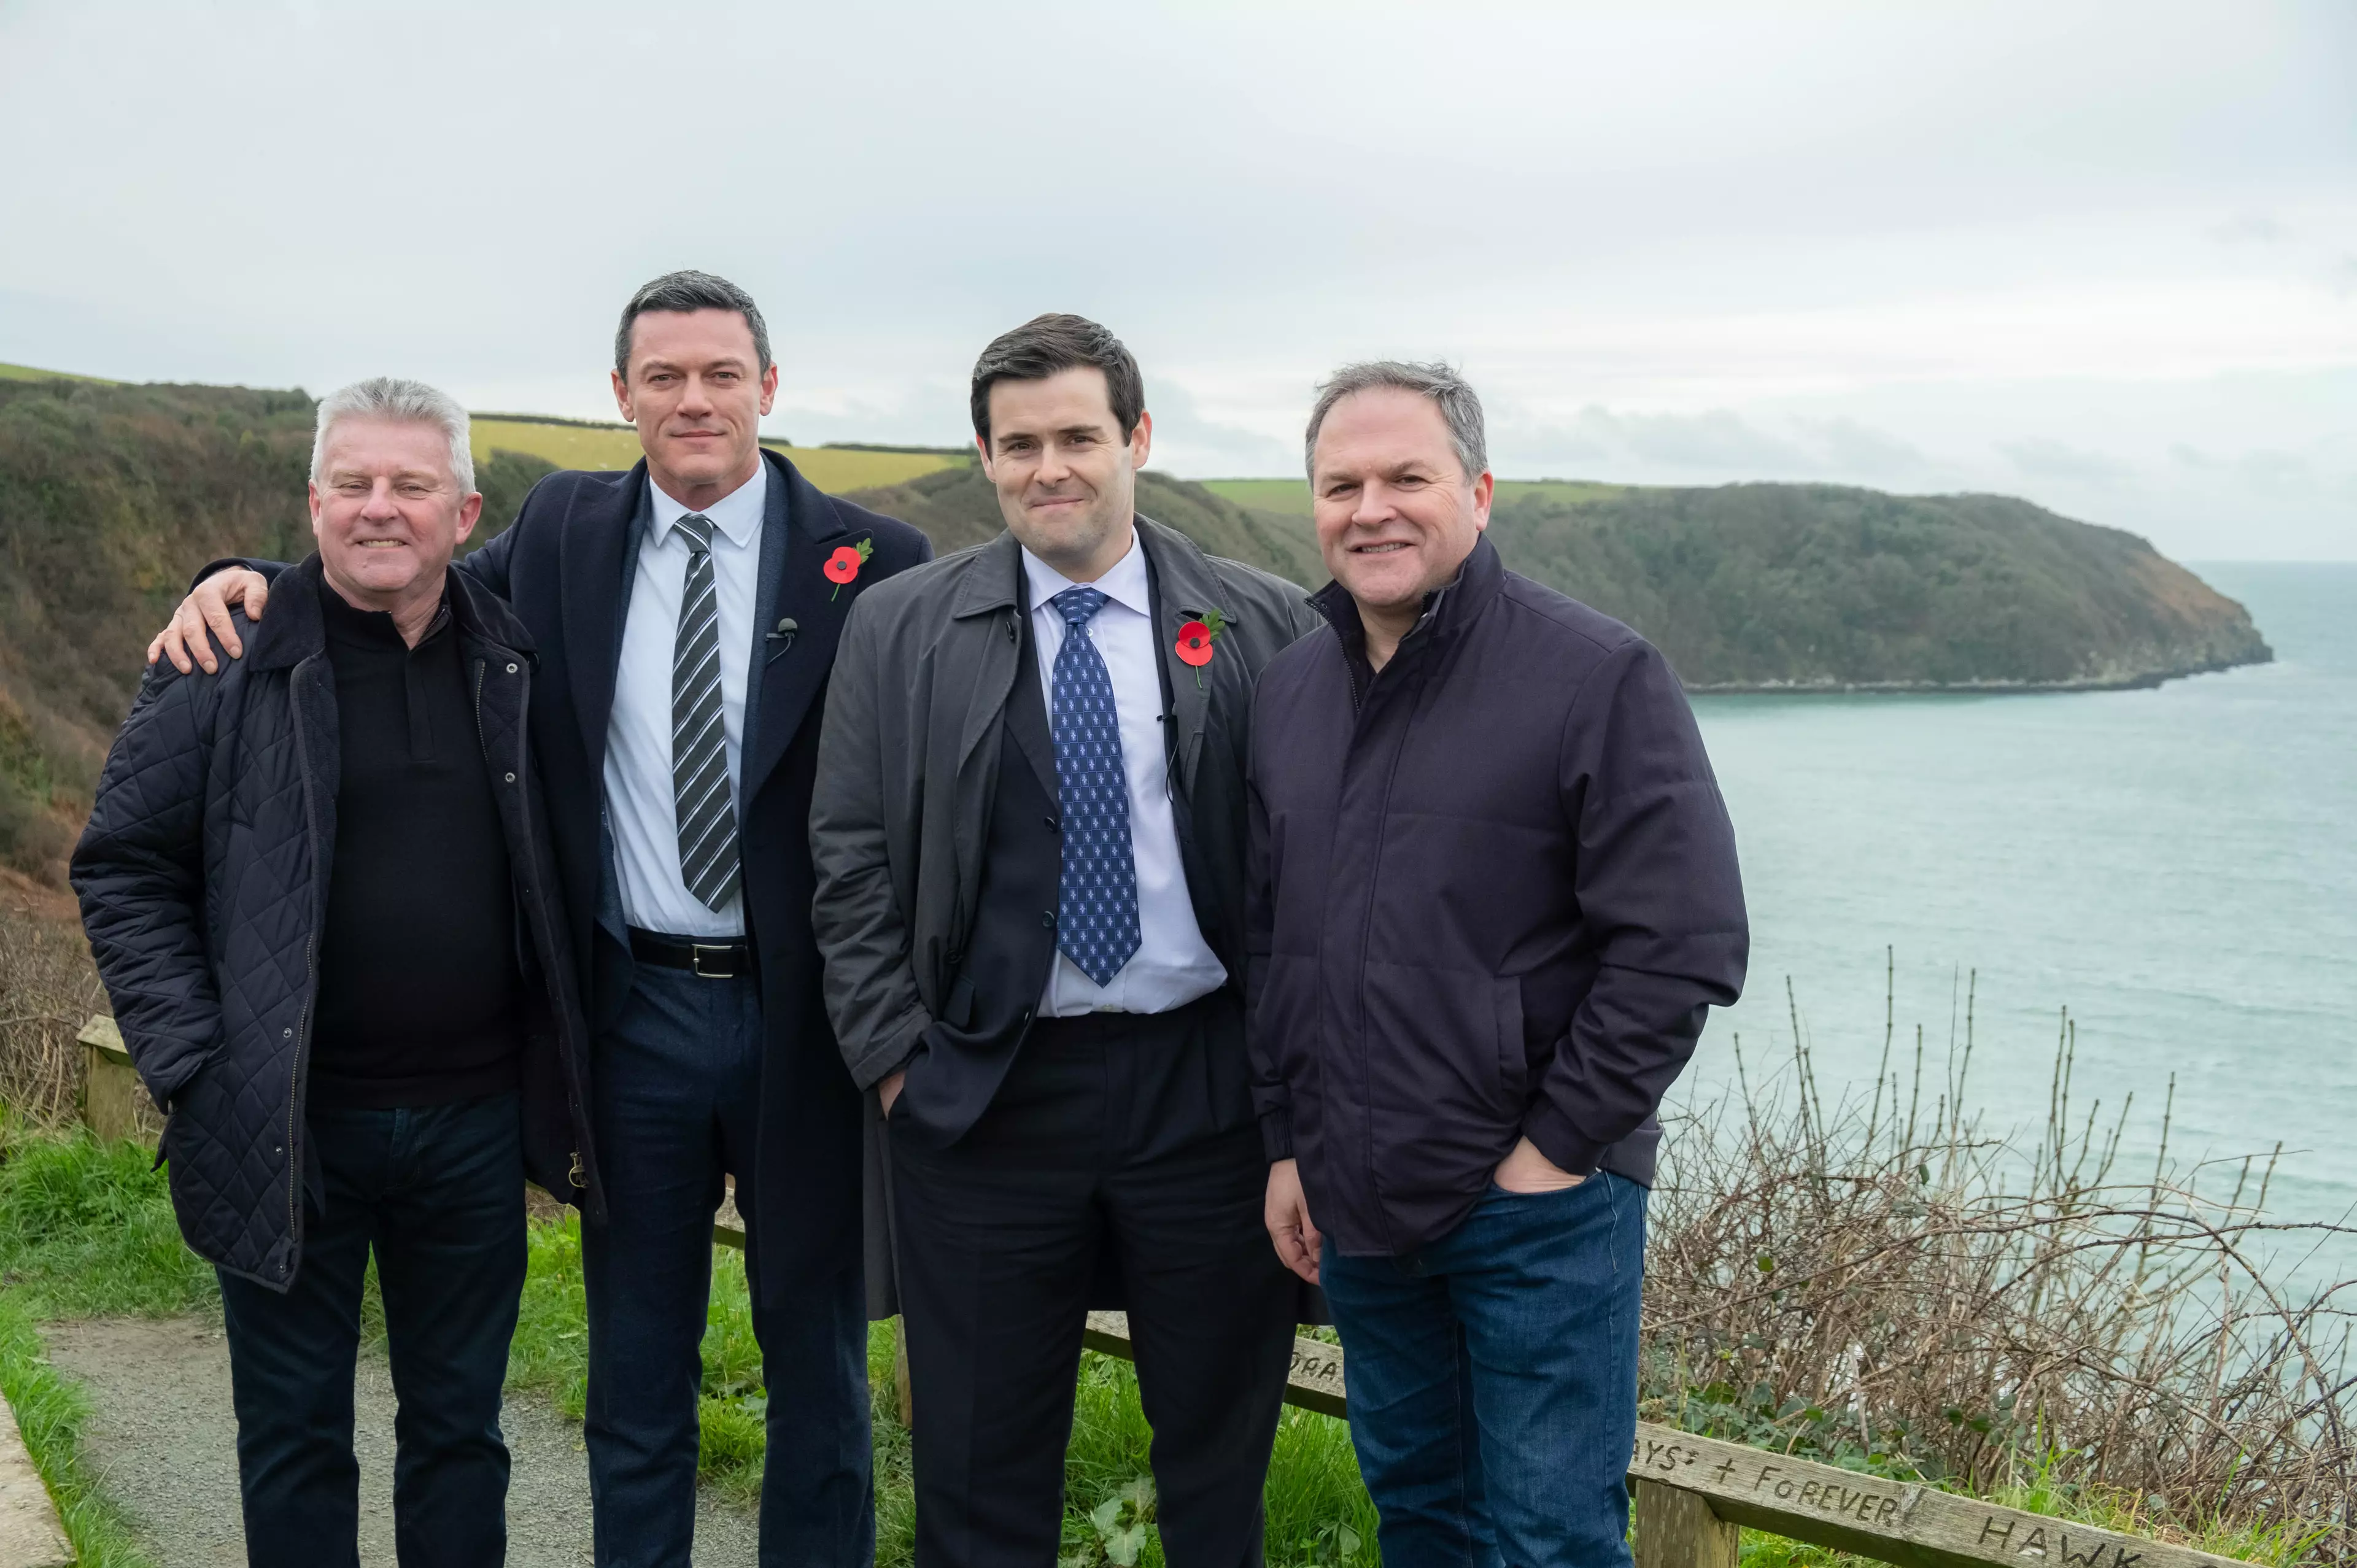 Steve Wilkins, Luke Evans, David Fynn and Jonathan Hill on set of The Pembrokeshire Murders (